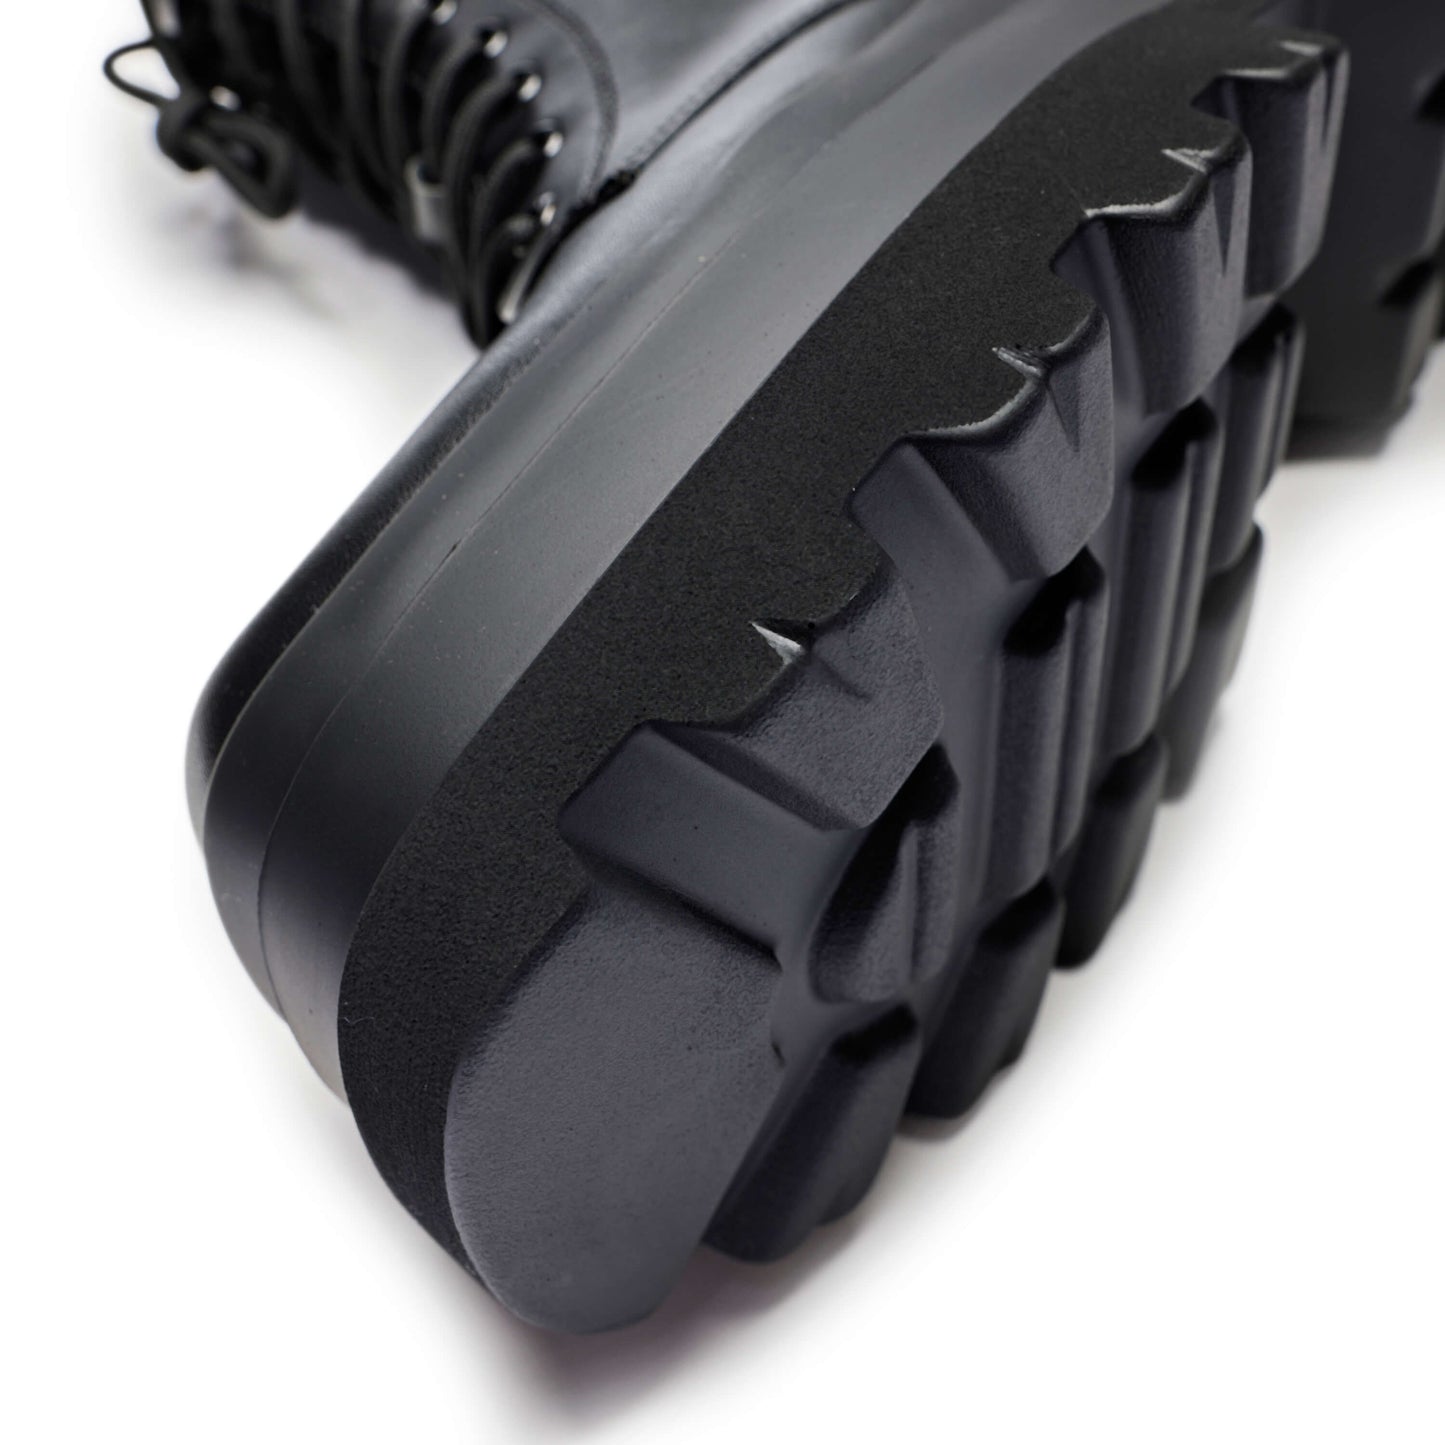 Deathwatch Trident Platform Boots - Ankle Boots - KOI Footwear - Black - Sole Detail